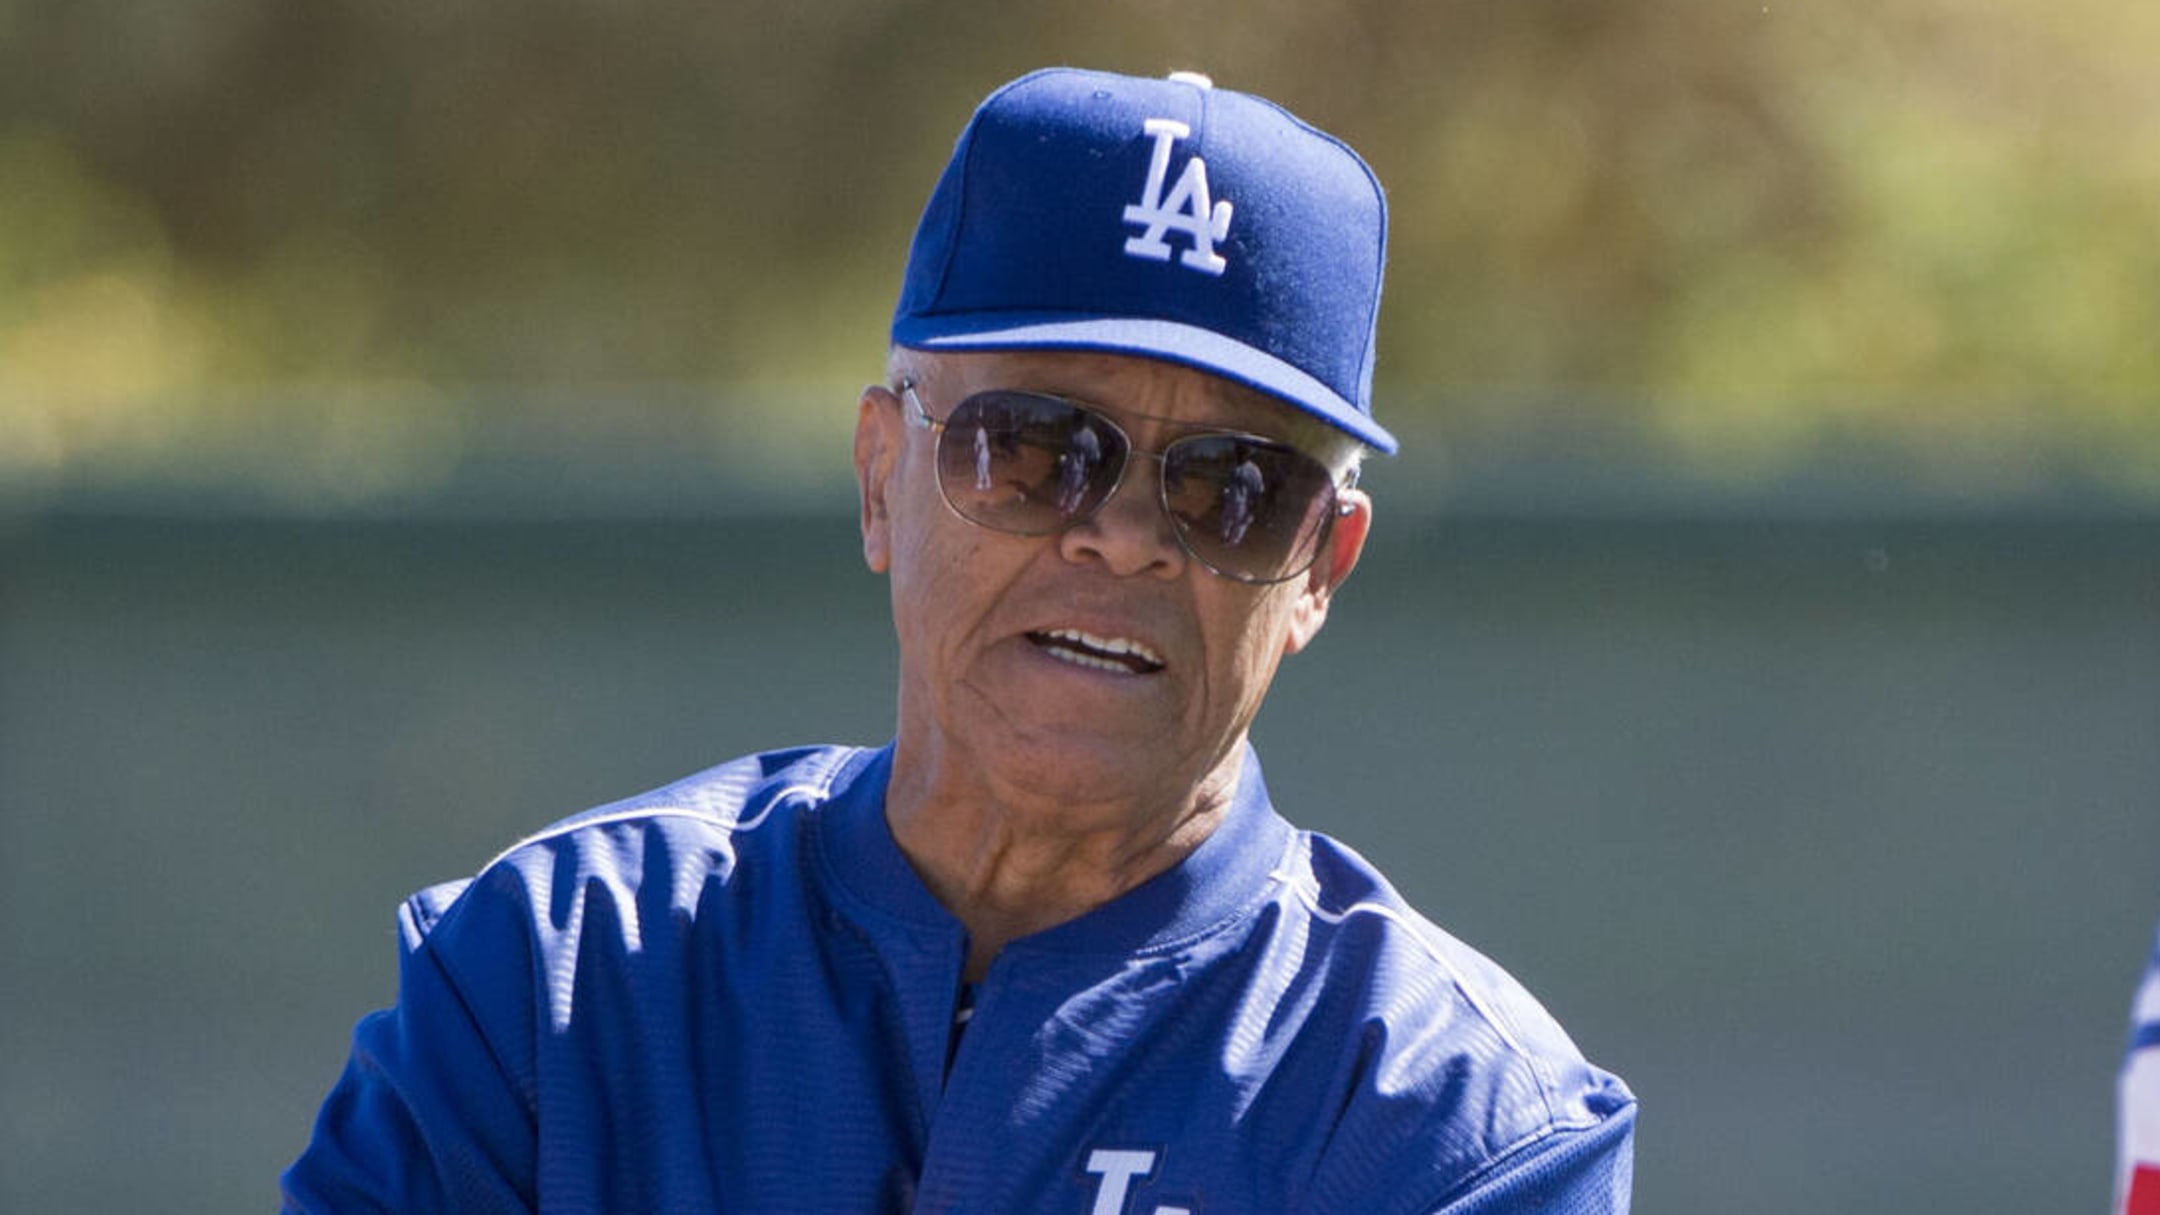 Dodgers legendary base-stealing shortstop, Maury Wills, dies at 89